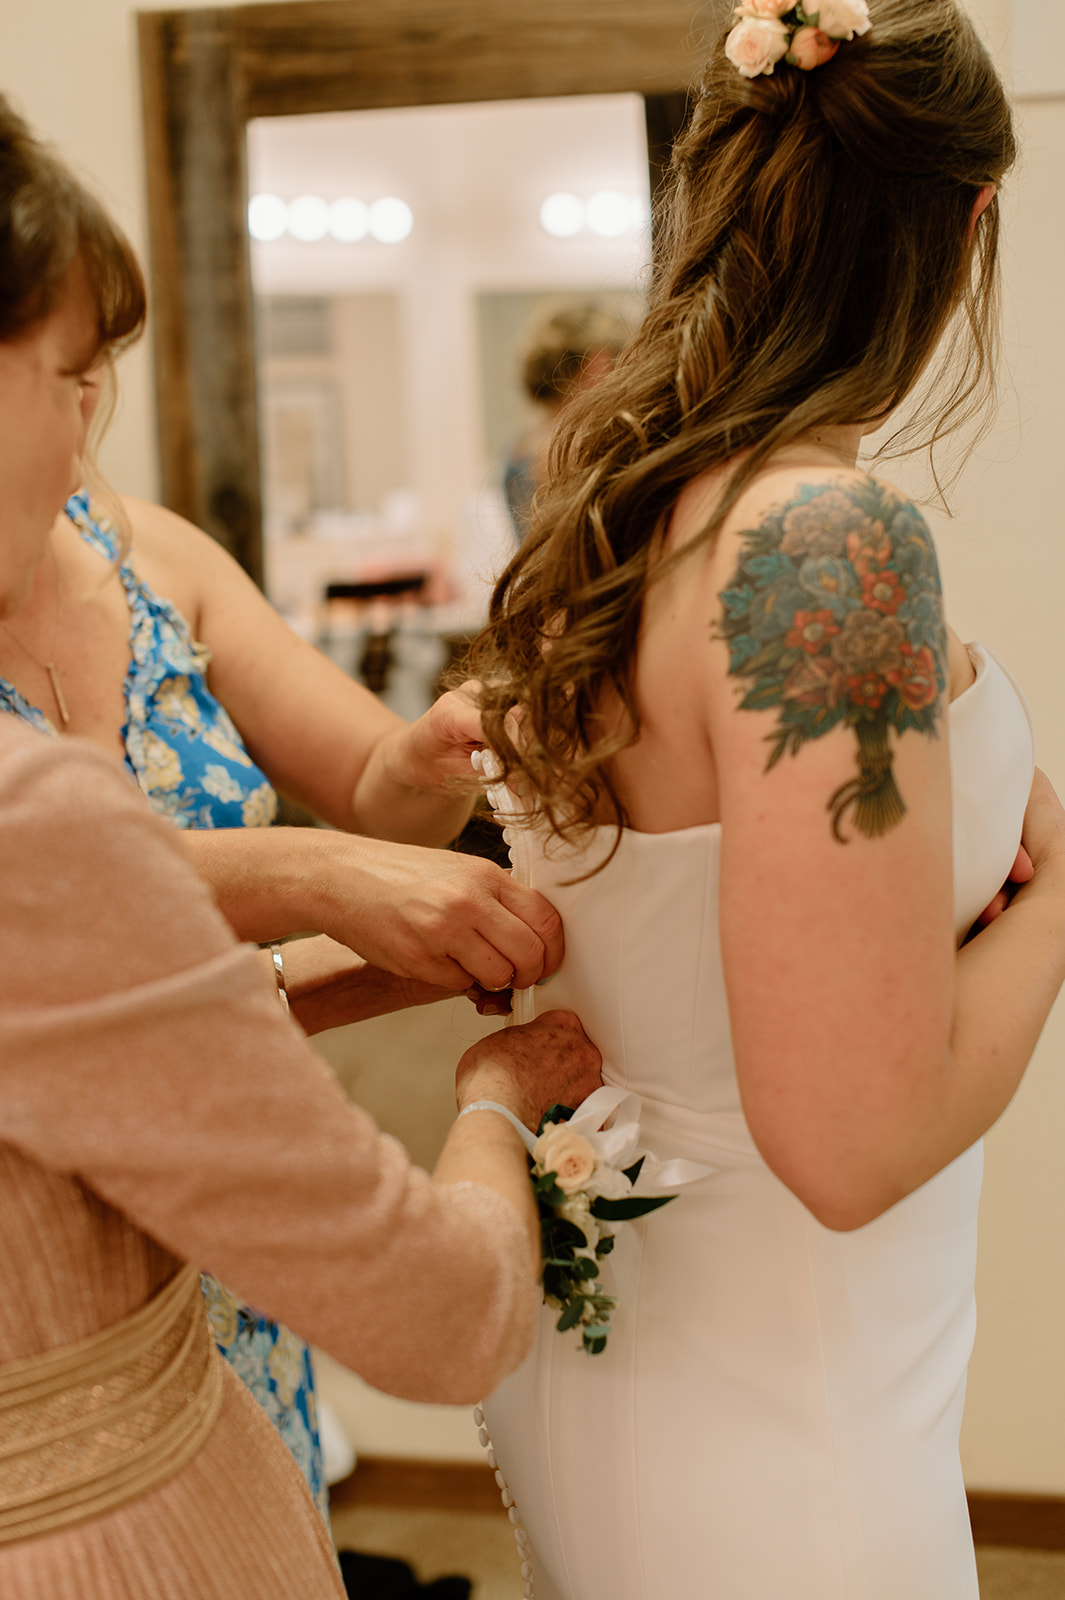 Sydney Jai Photography - Petaluma wedding, bride getting ready, bridal look, bride hair and makeup